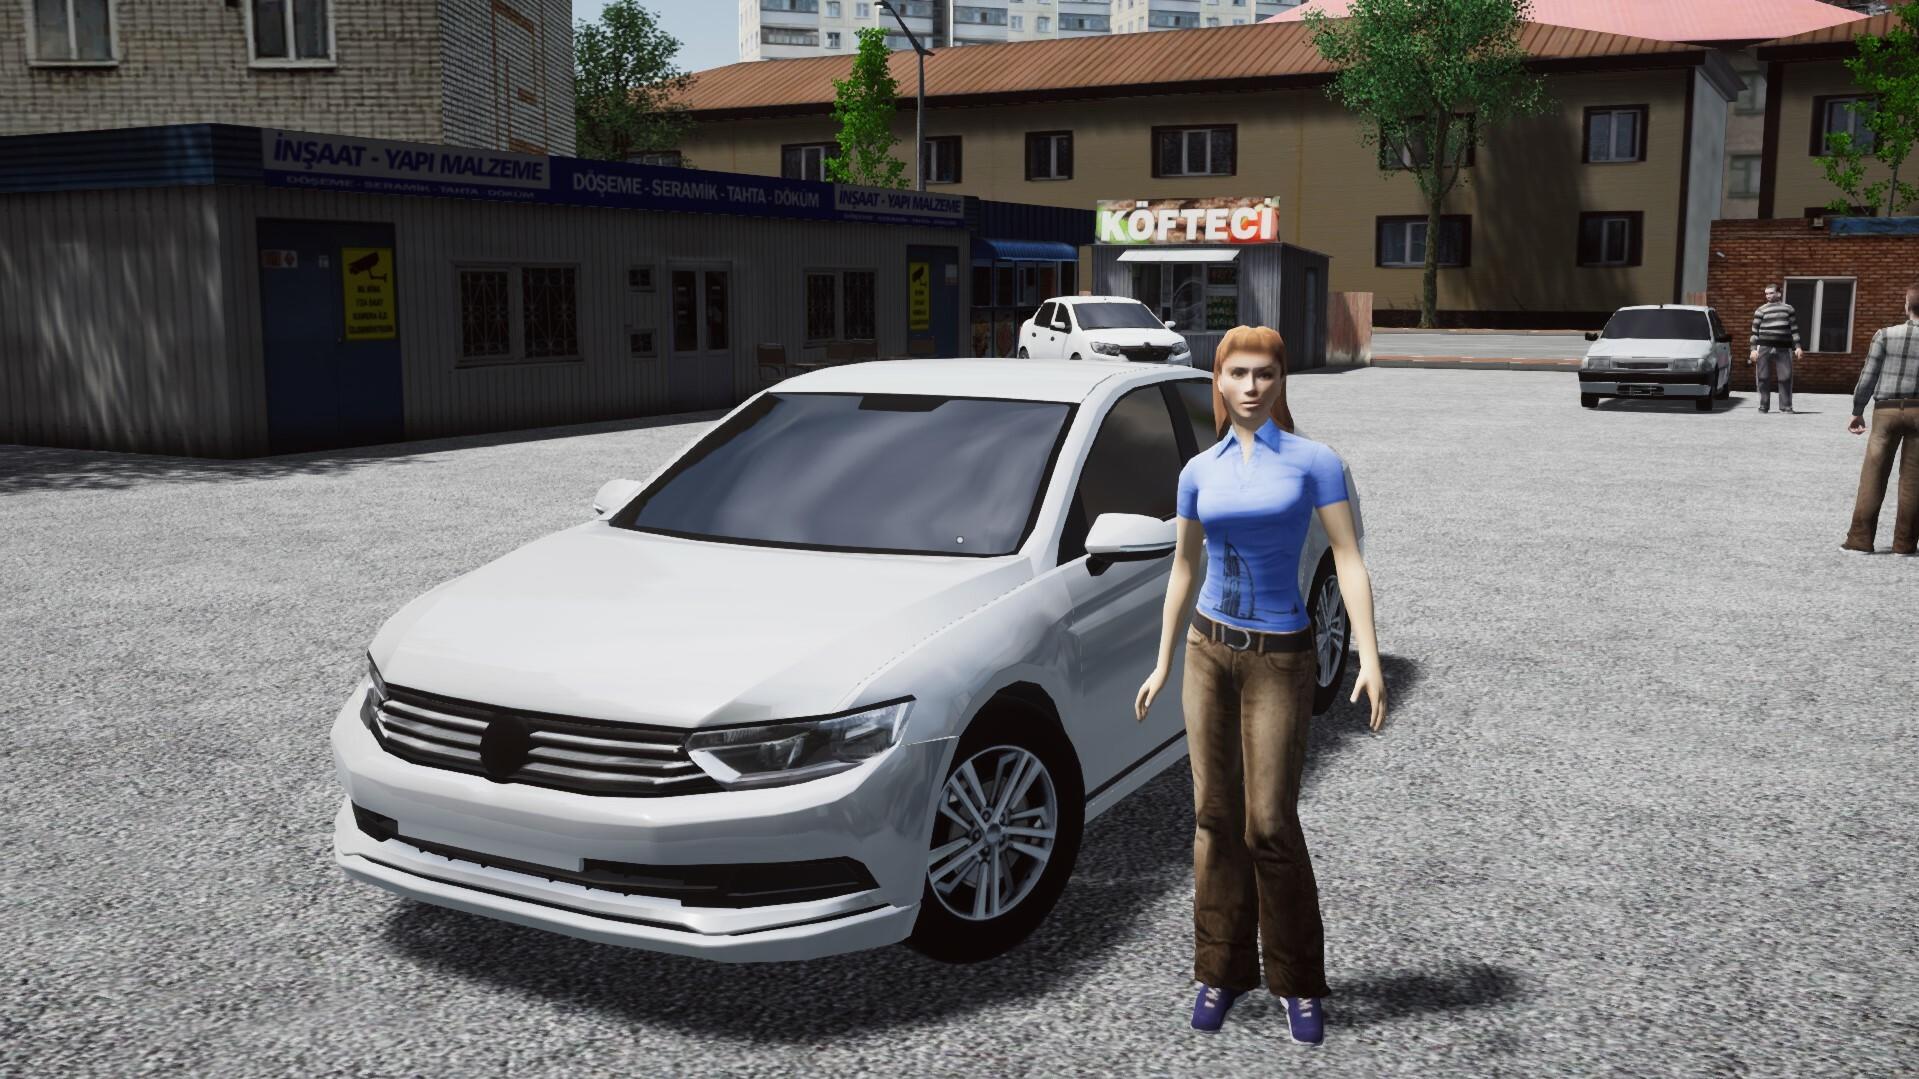 Car Dealership Simulator遊戲截圖